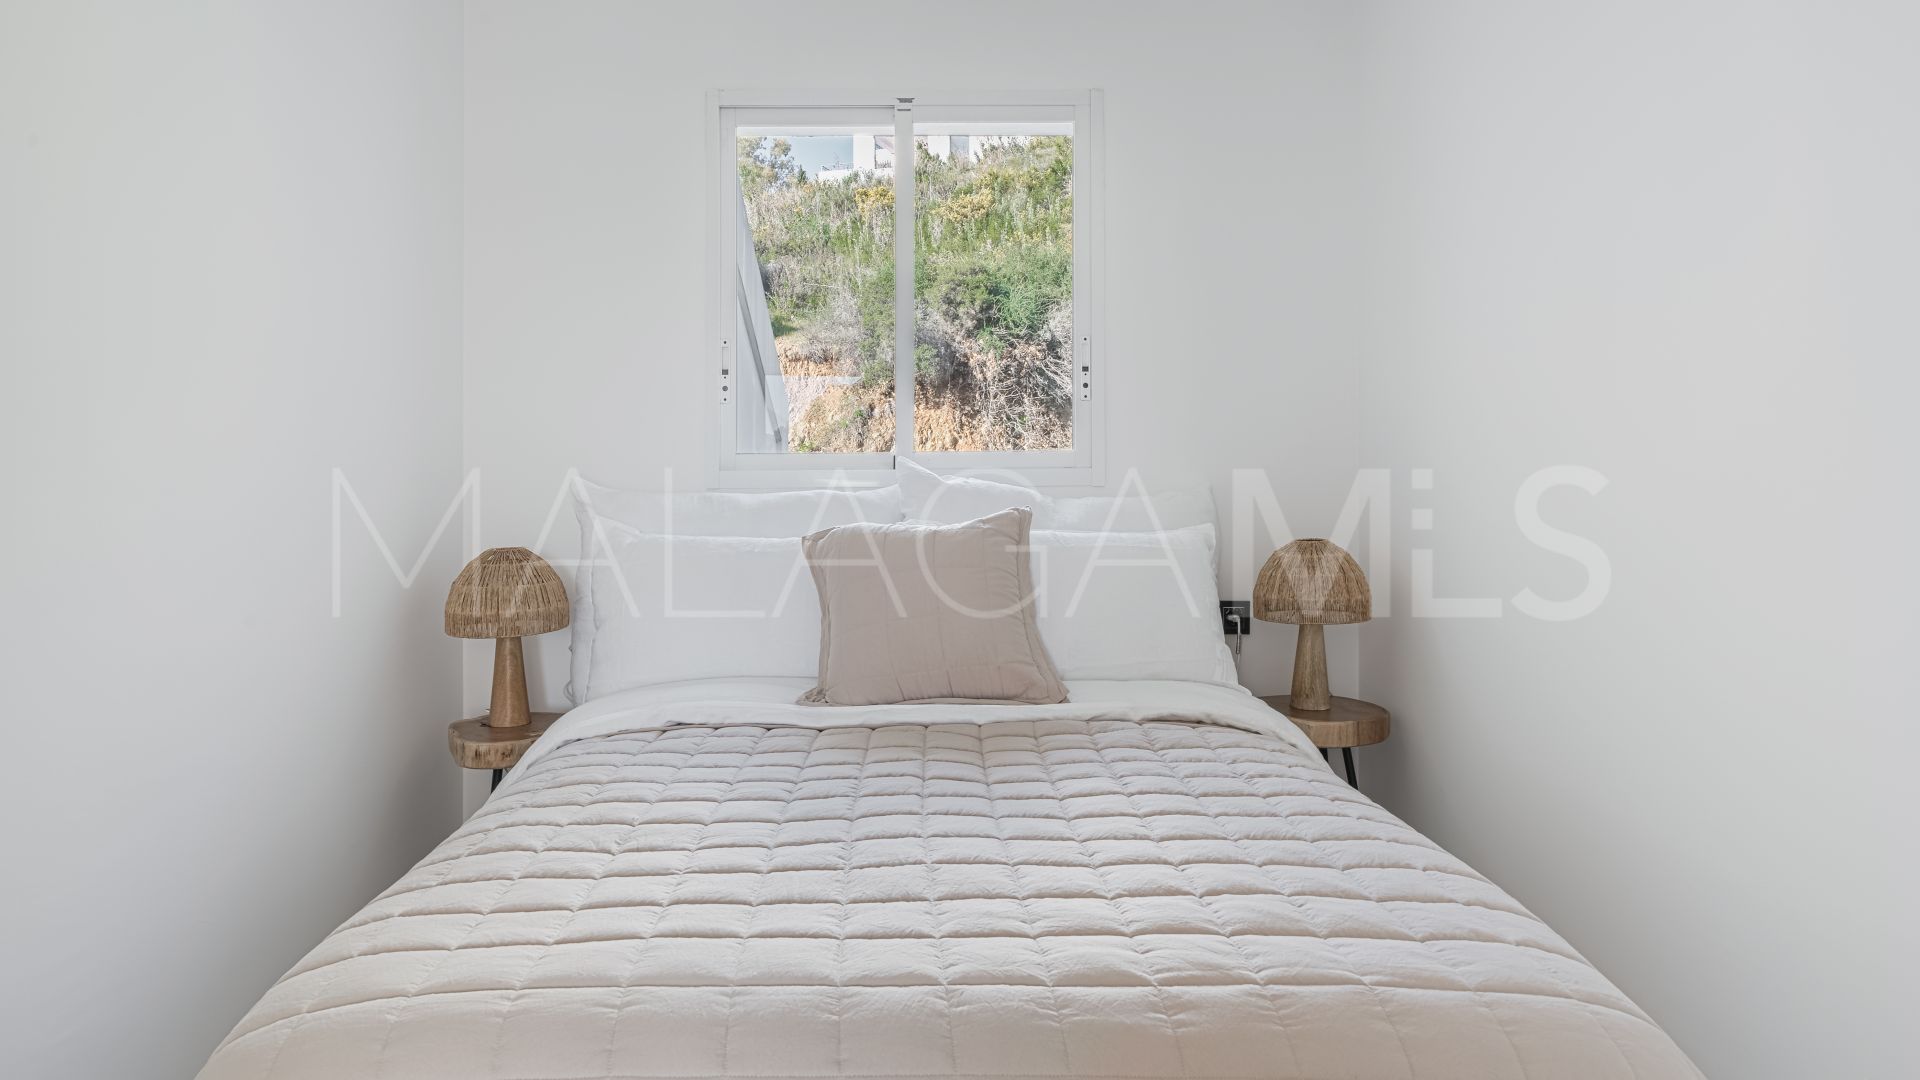 Atico for sale with 2 bedrooms in La Quinta